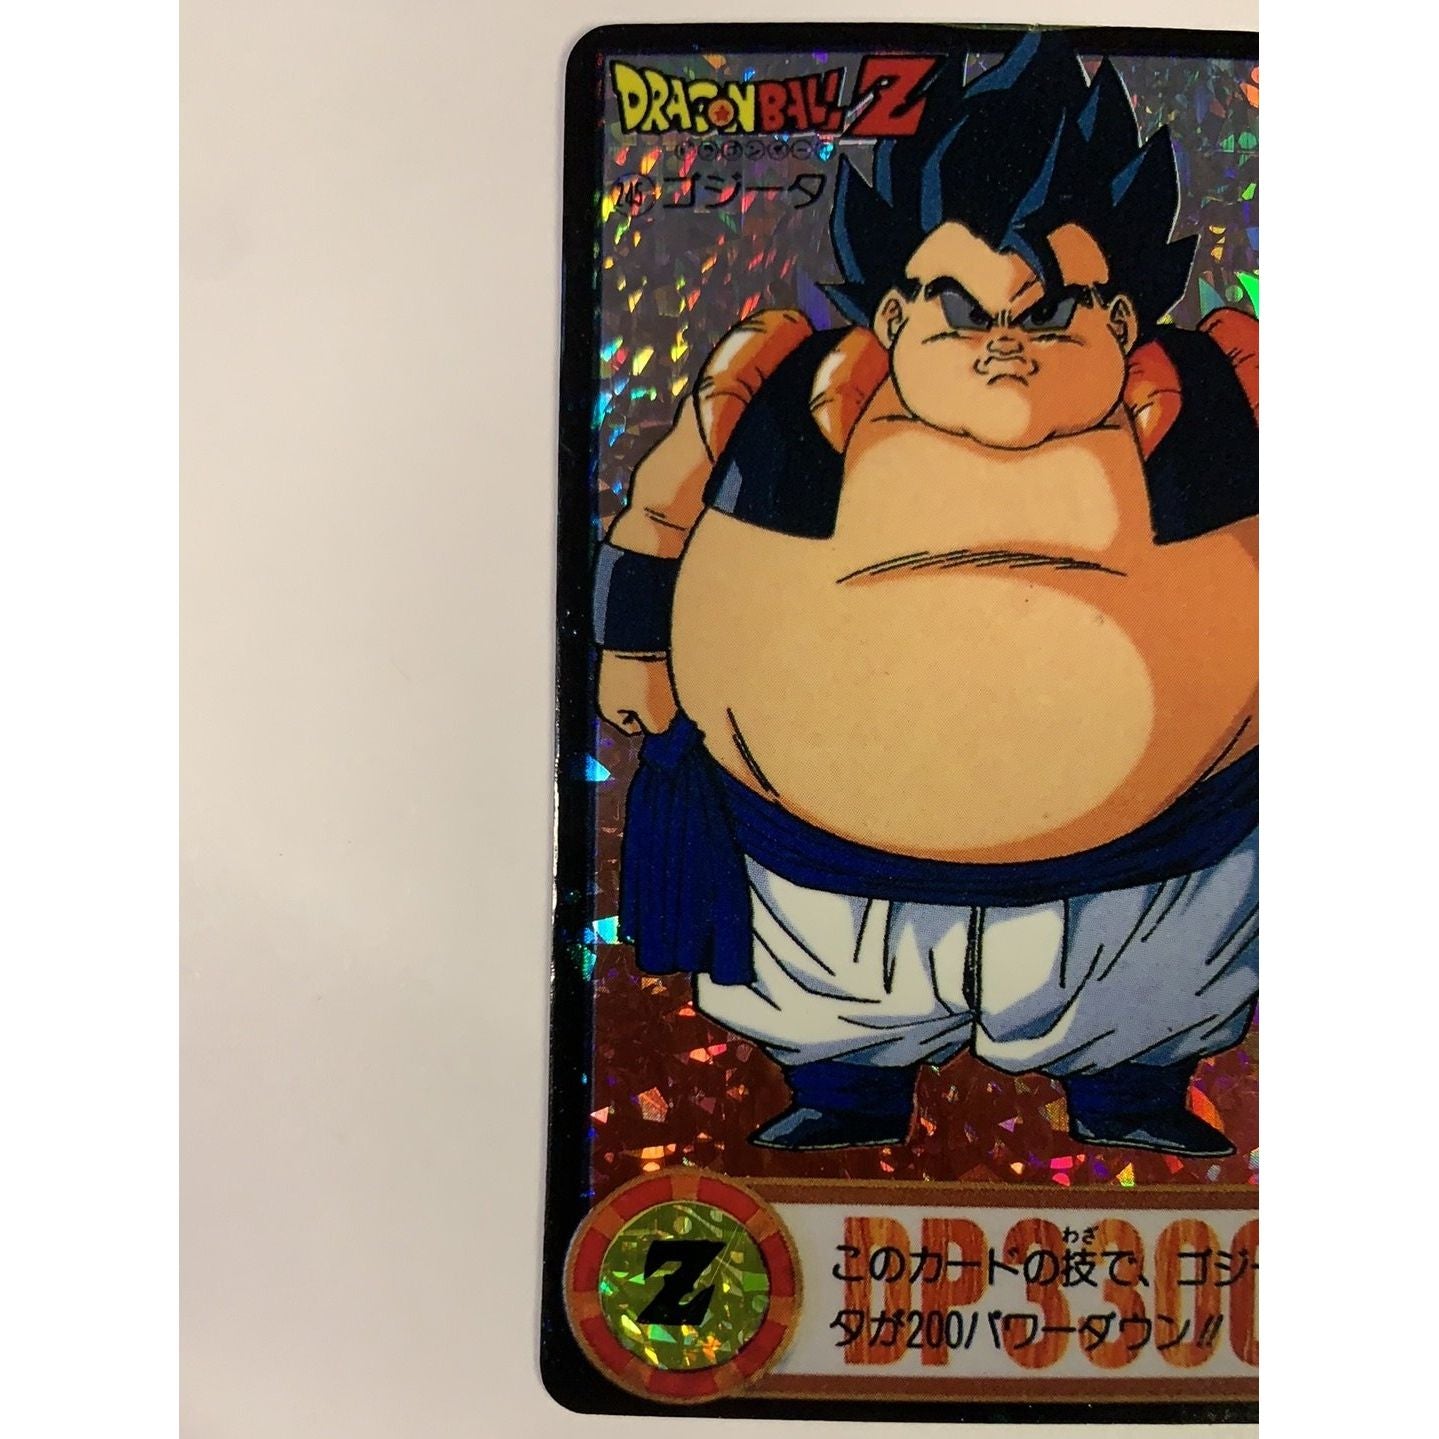  1995 Cardass Hondan Dragon Ball Z #891 Japanese Vending Machine Prism Sticker  Local Legends Cards & Collectibles